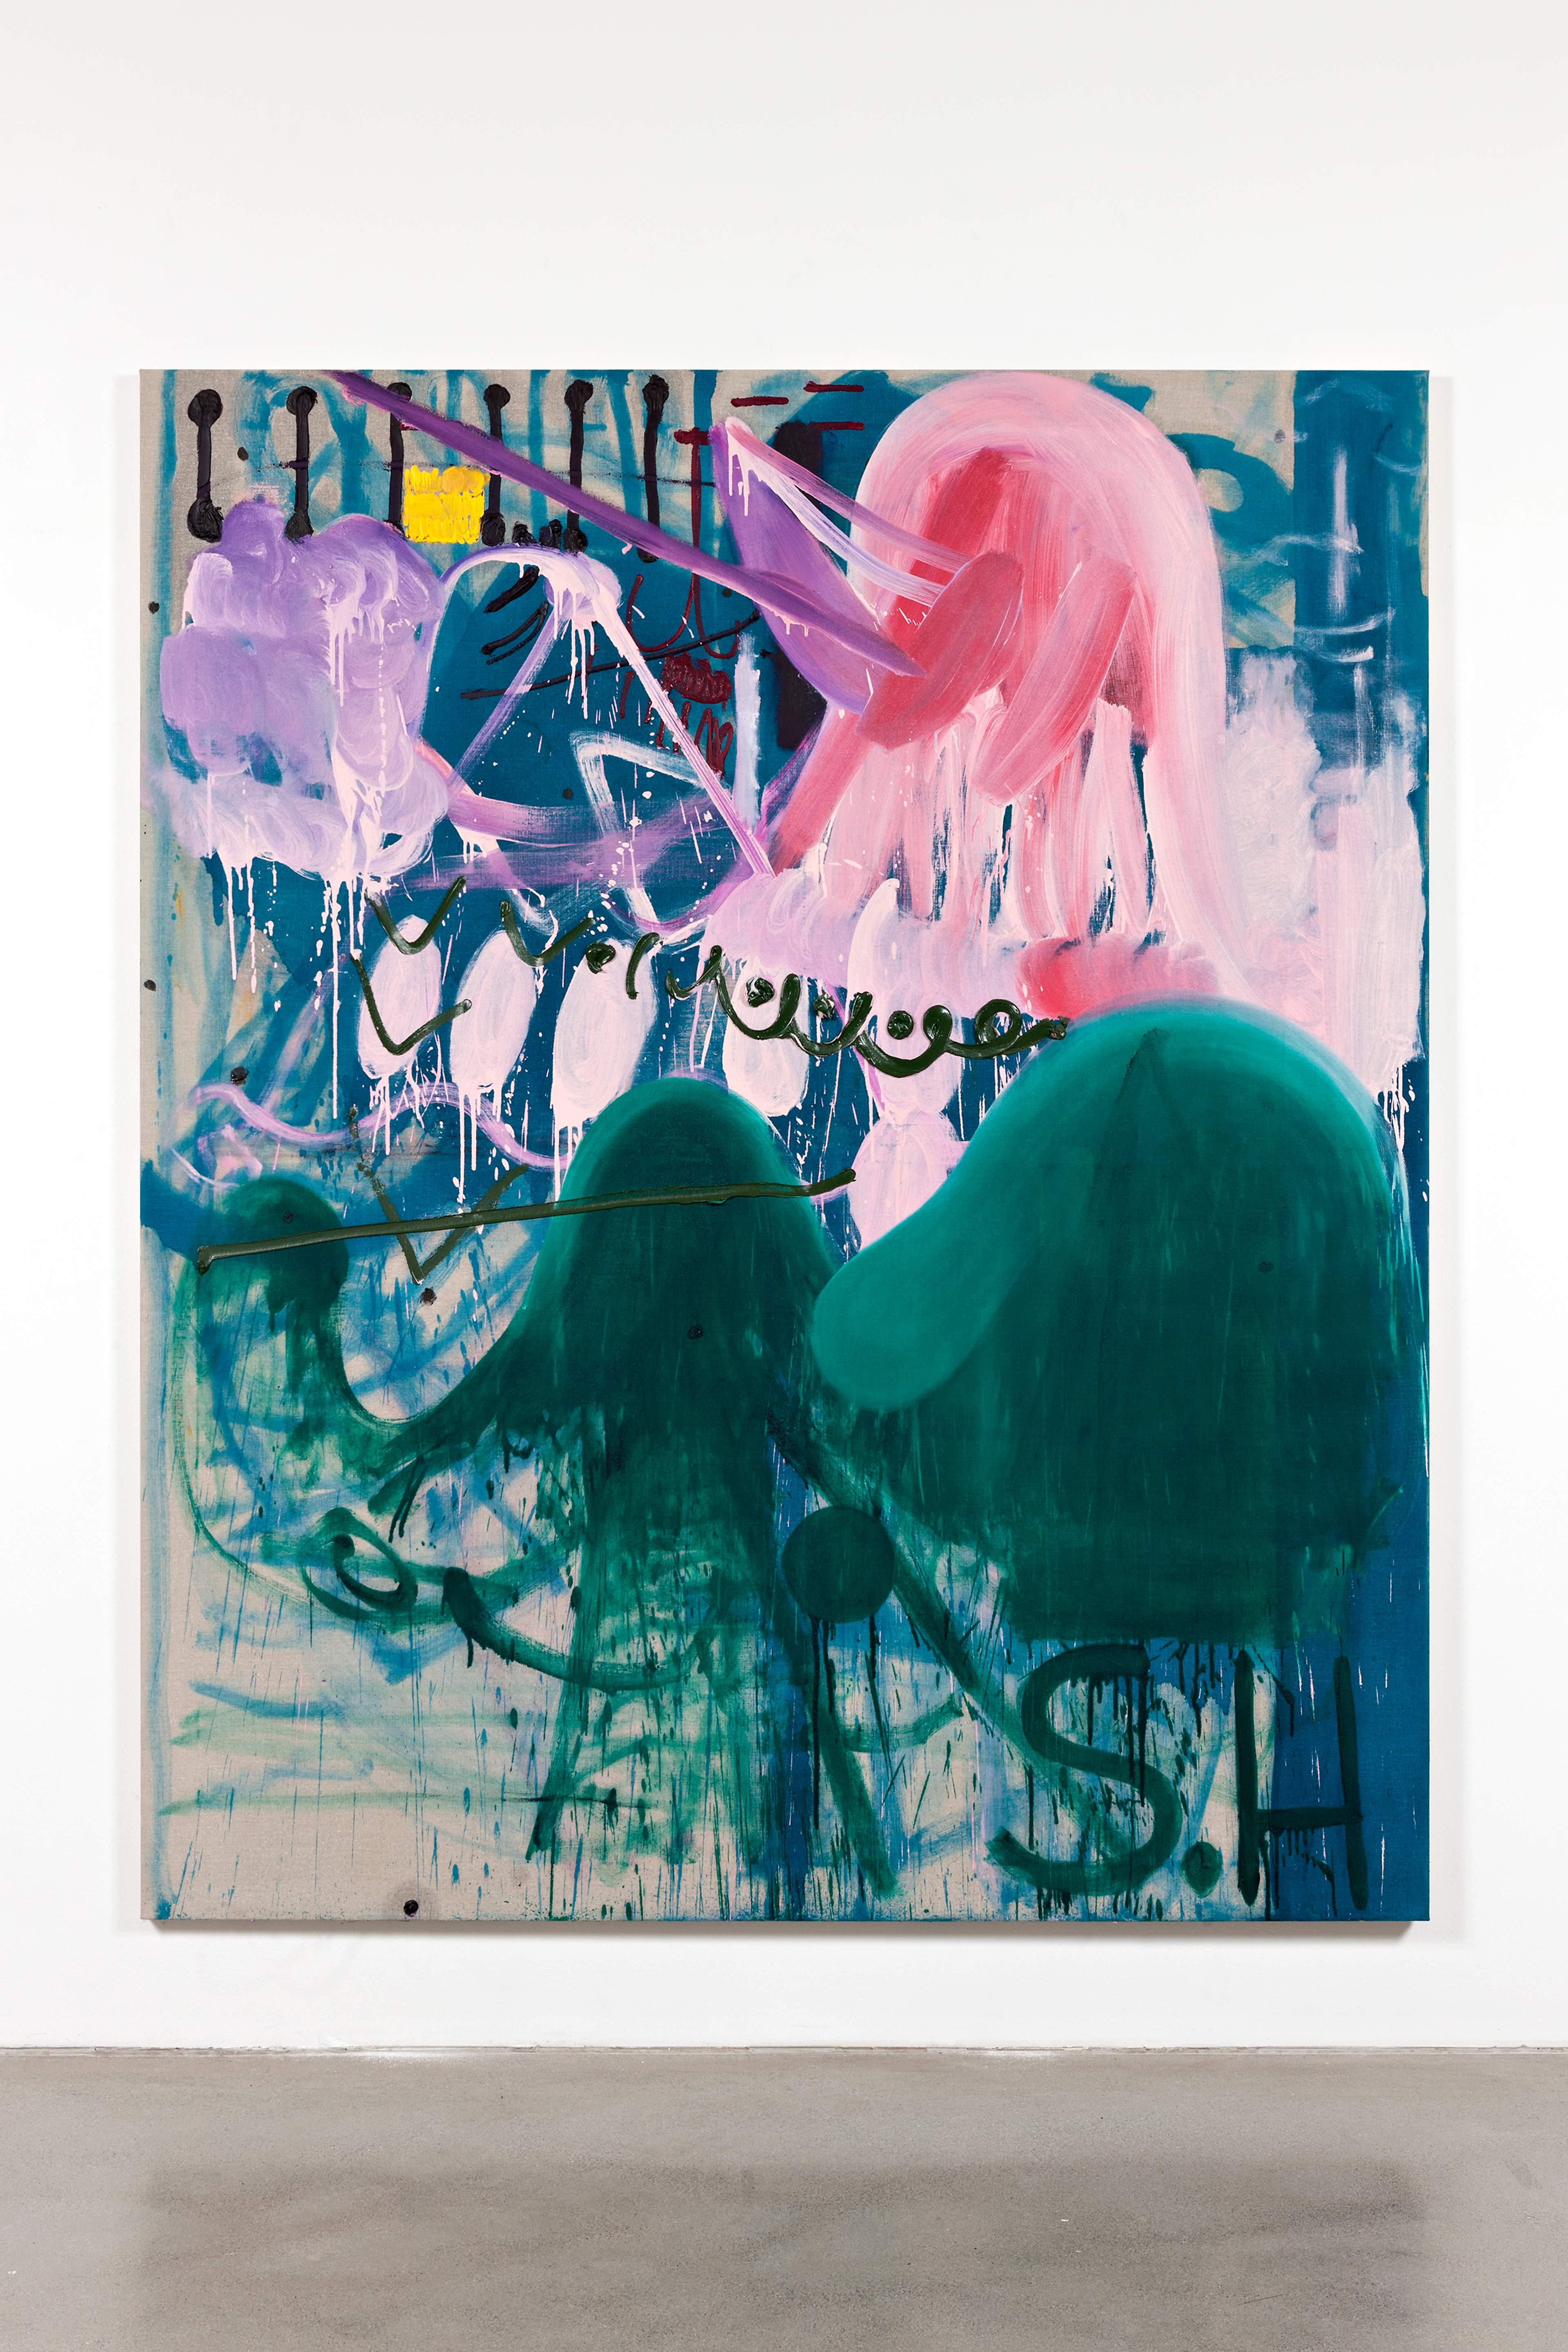 Sebastian Helling, Candy, 2013, oil paint on linen, 220x183 cm